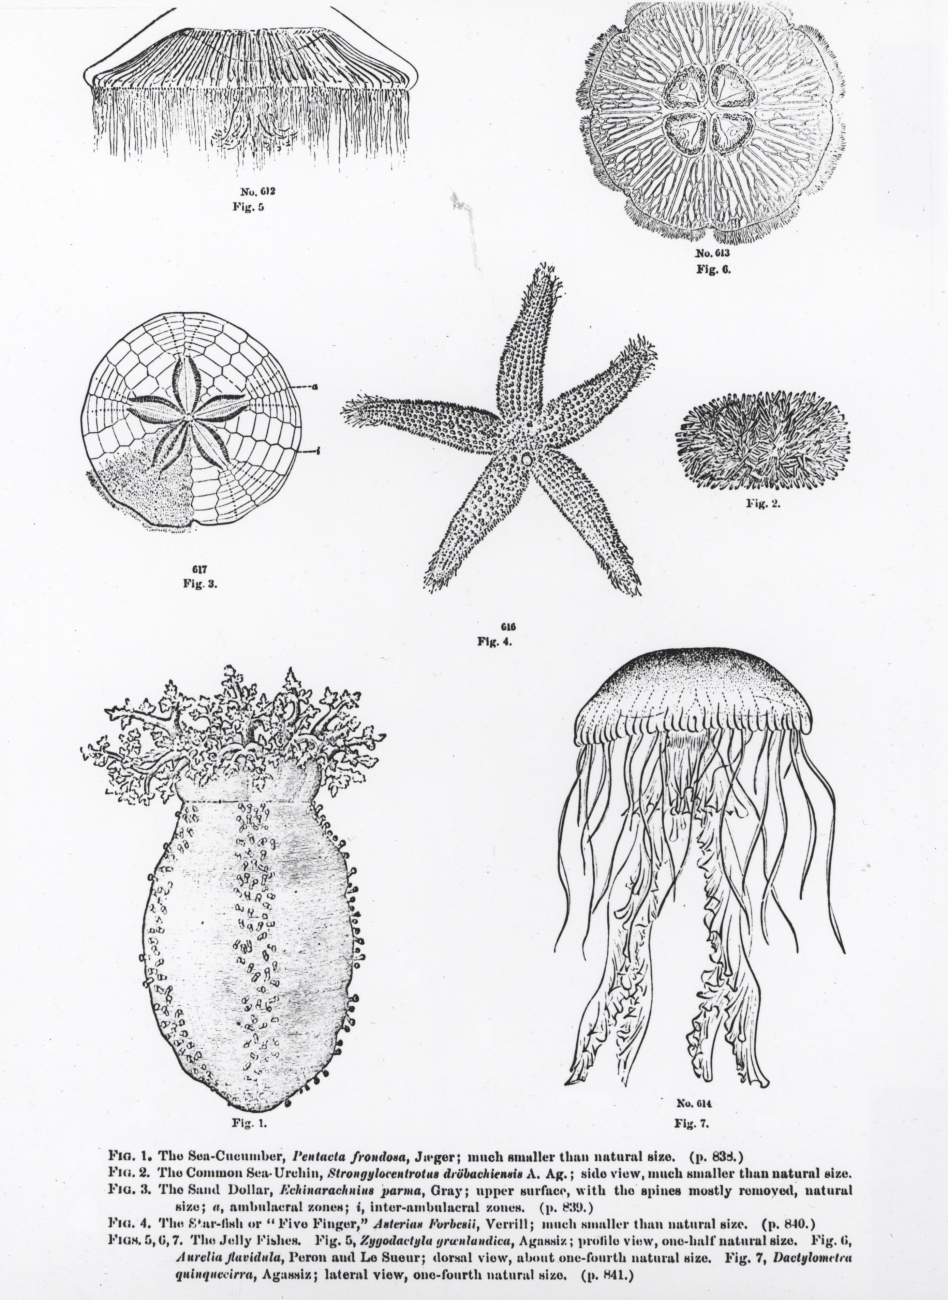 Sea-cucumber, sea-urchin, sand dollar, starfish, and two jellyfish shown inartwork